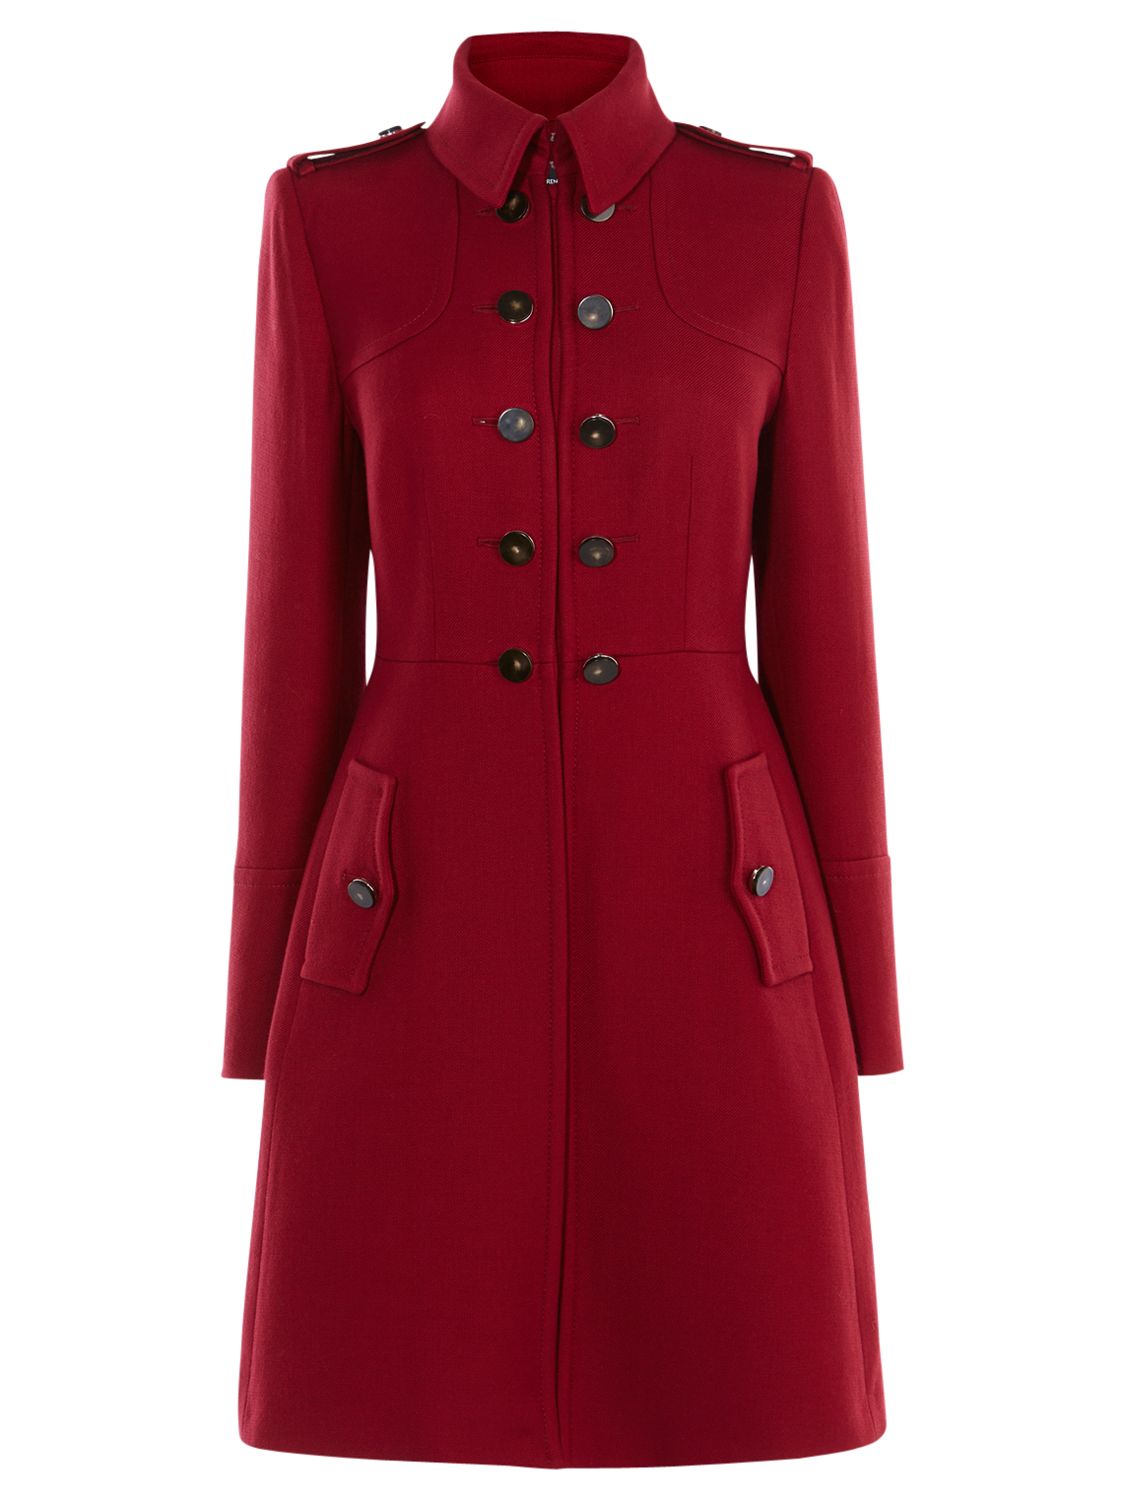 Karen Millen Military Coat, Red at John Lewis & Partners